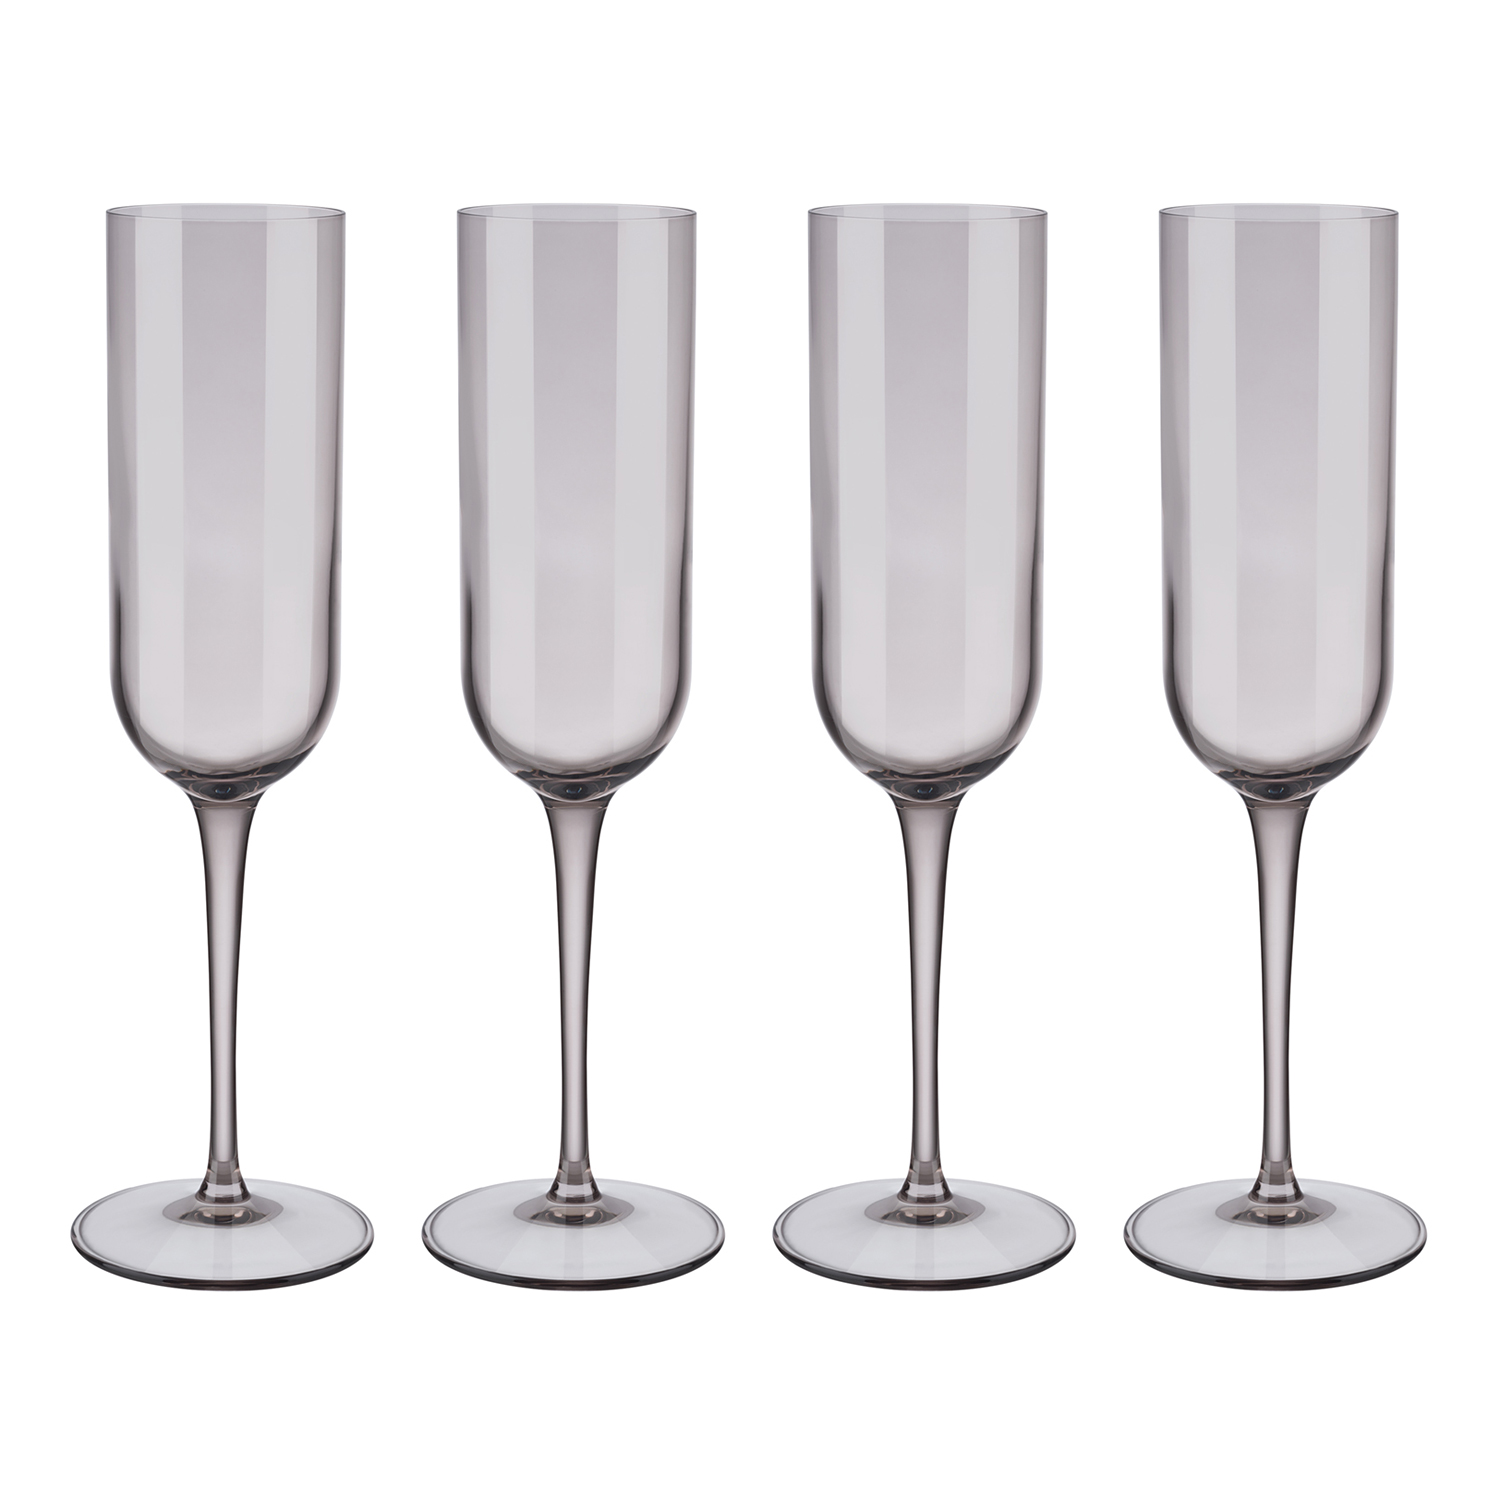 Set 4 sklenic flétna na šampaňské FUUM hnědé sklo Blomus